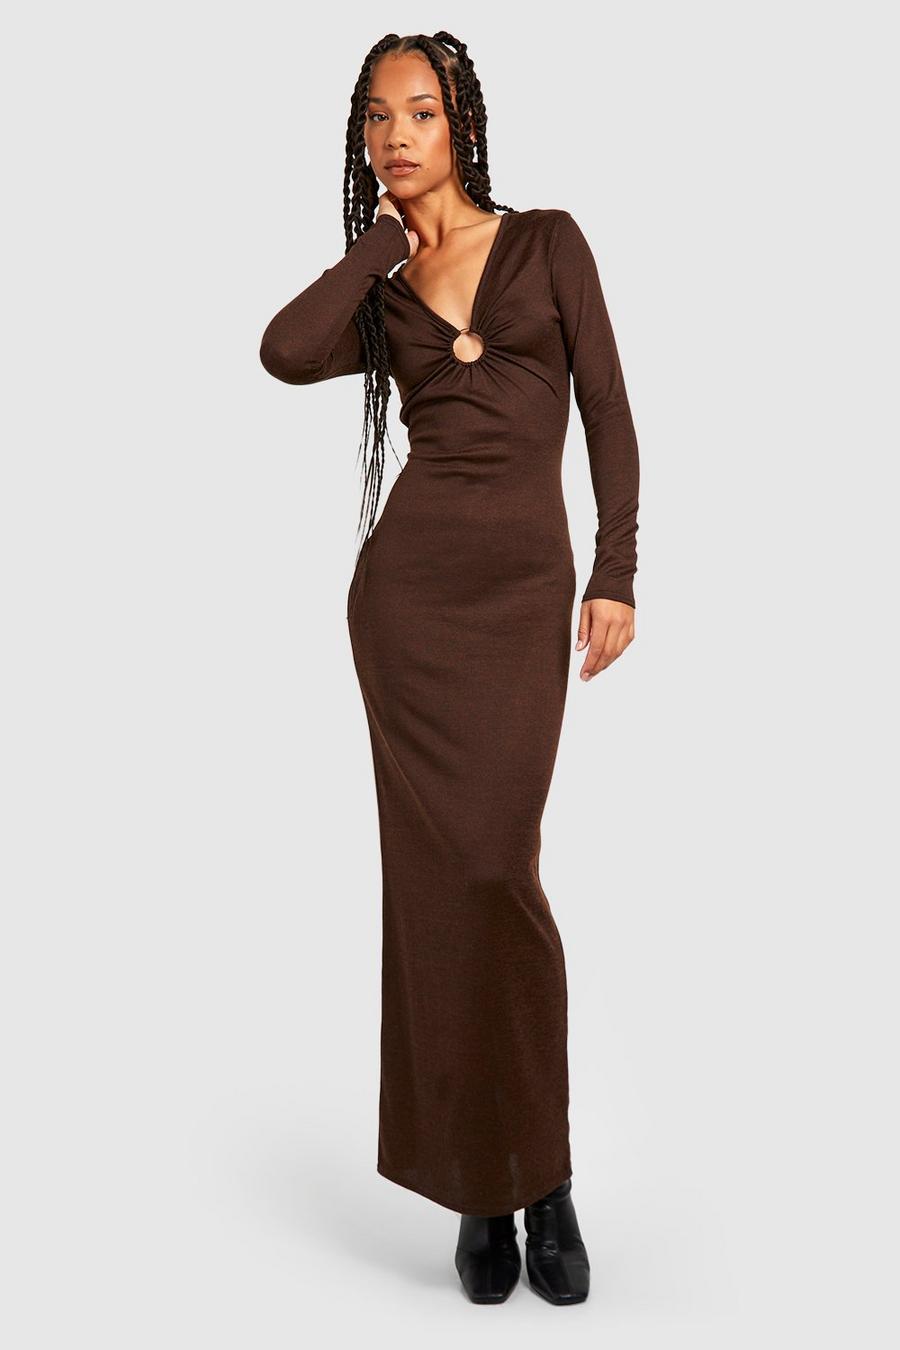 Chocolate marrón Tall Lightweight Knitted O-ring Maxi Dress